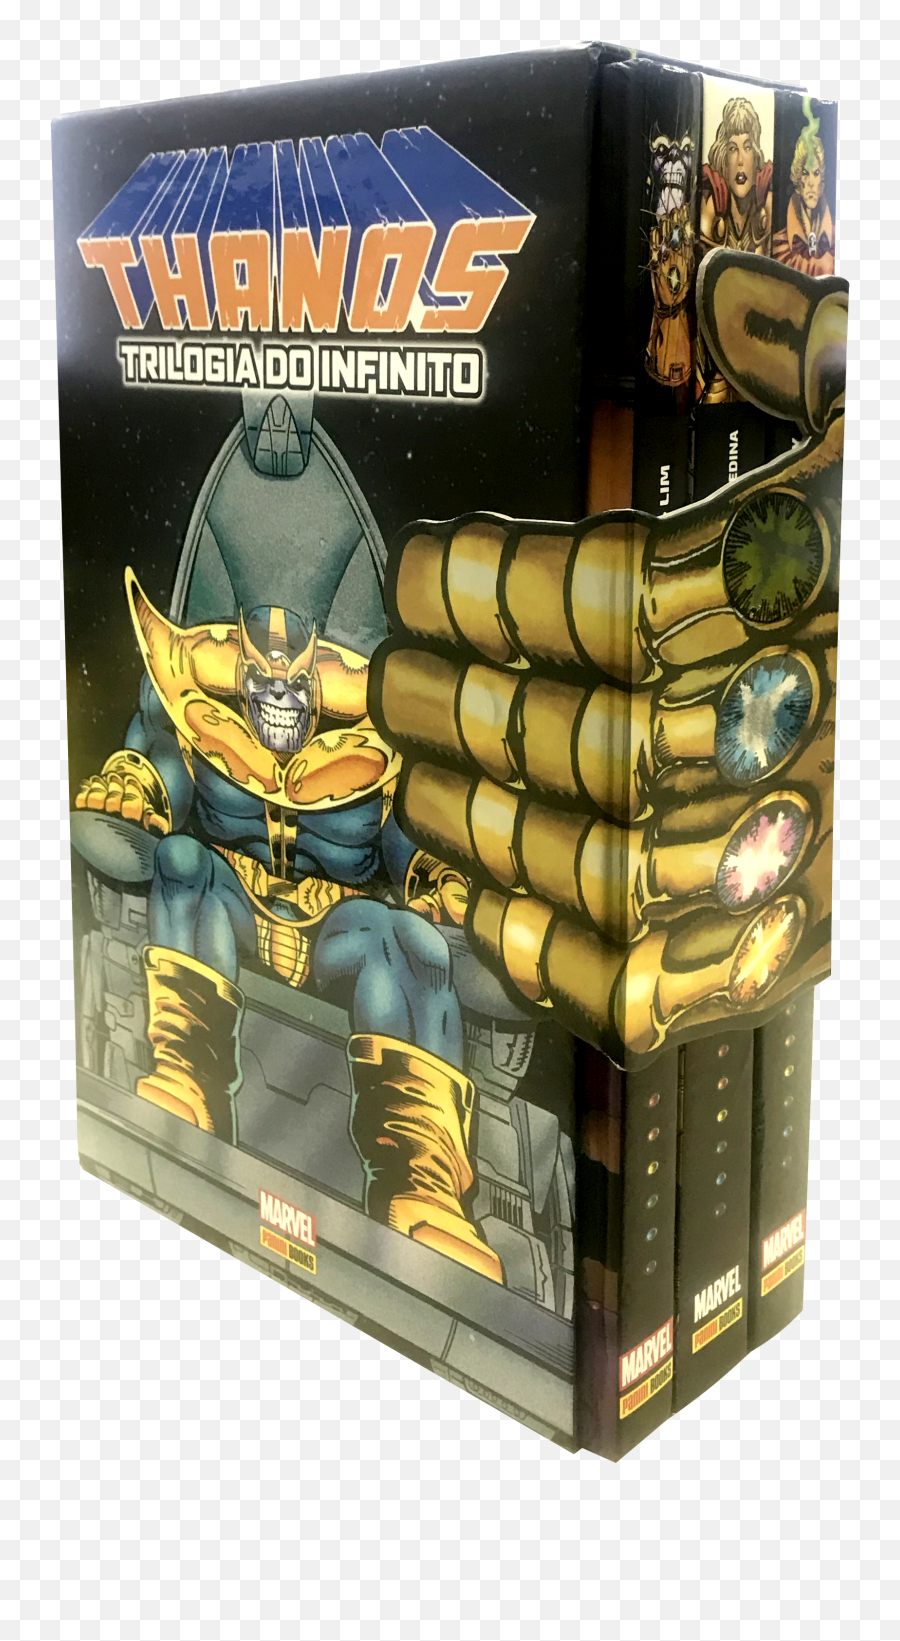 Download Thanos Png - Box Thanos Trilogia Do Infinito,Thanos Png